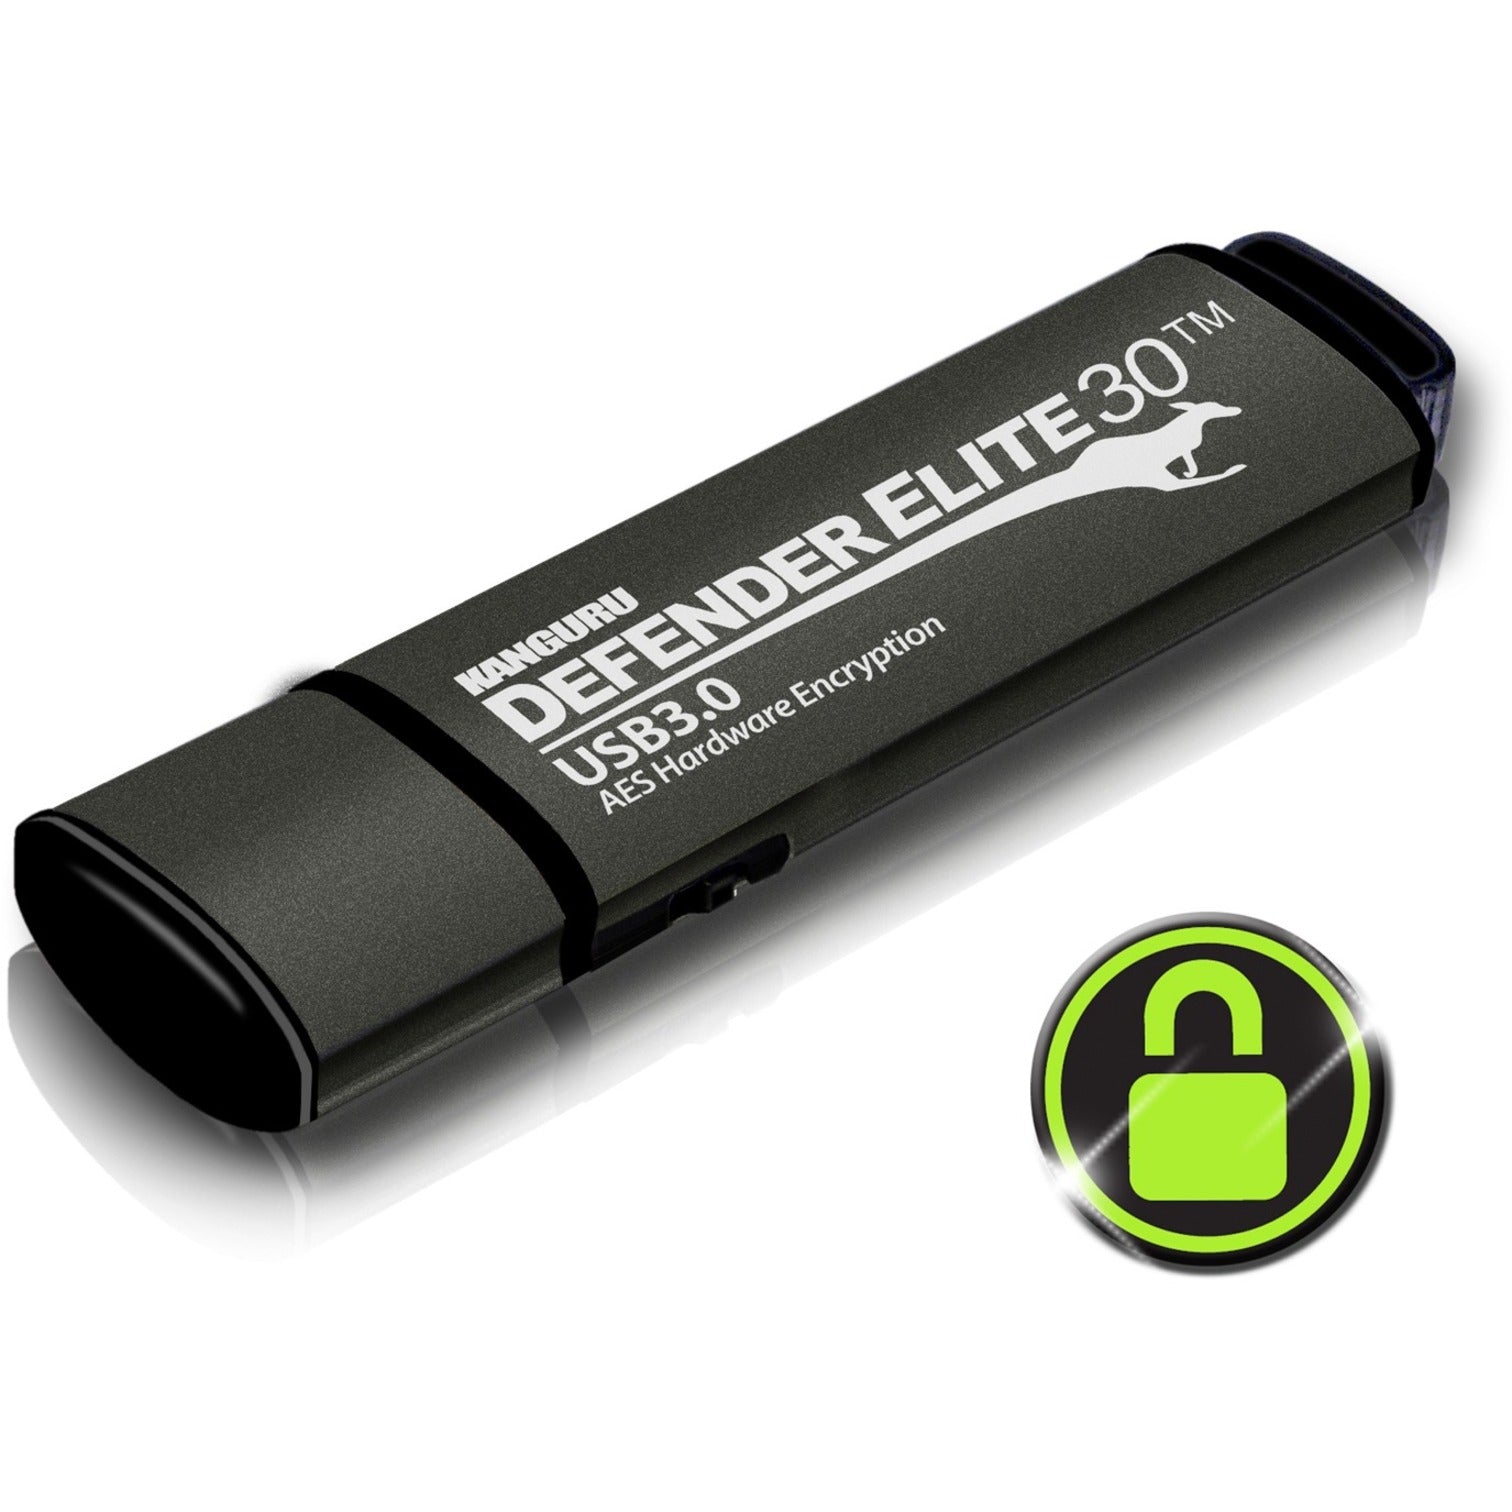 Kanguru KDFE30-64G Defender Elite30 Hardware Encrypted USB Flash Drive, 64GB, Tamper Proof, Anti-virus Protection